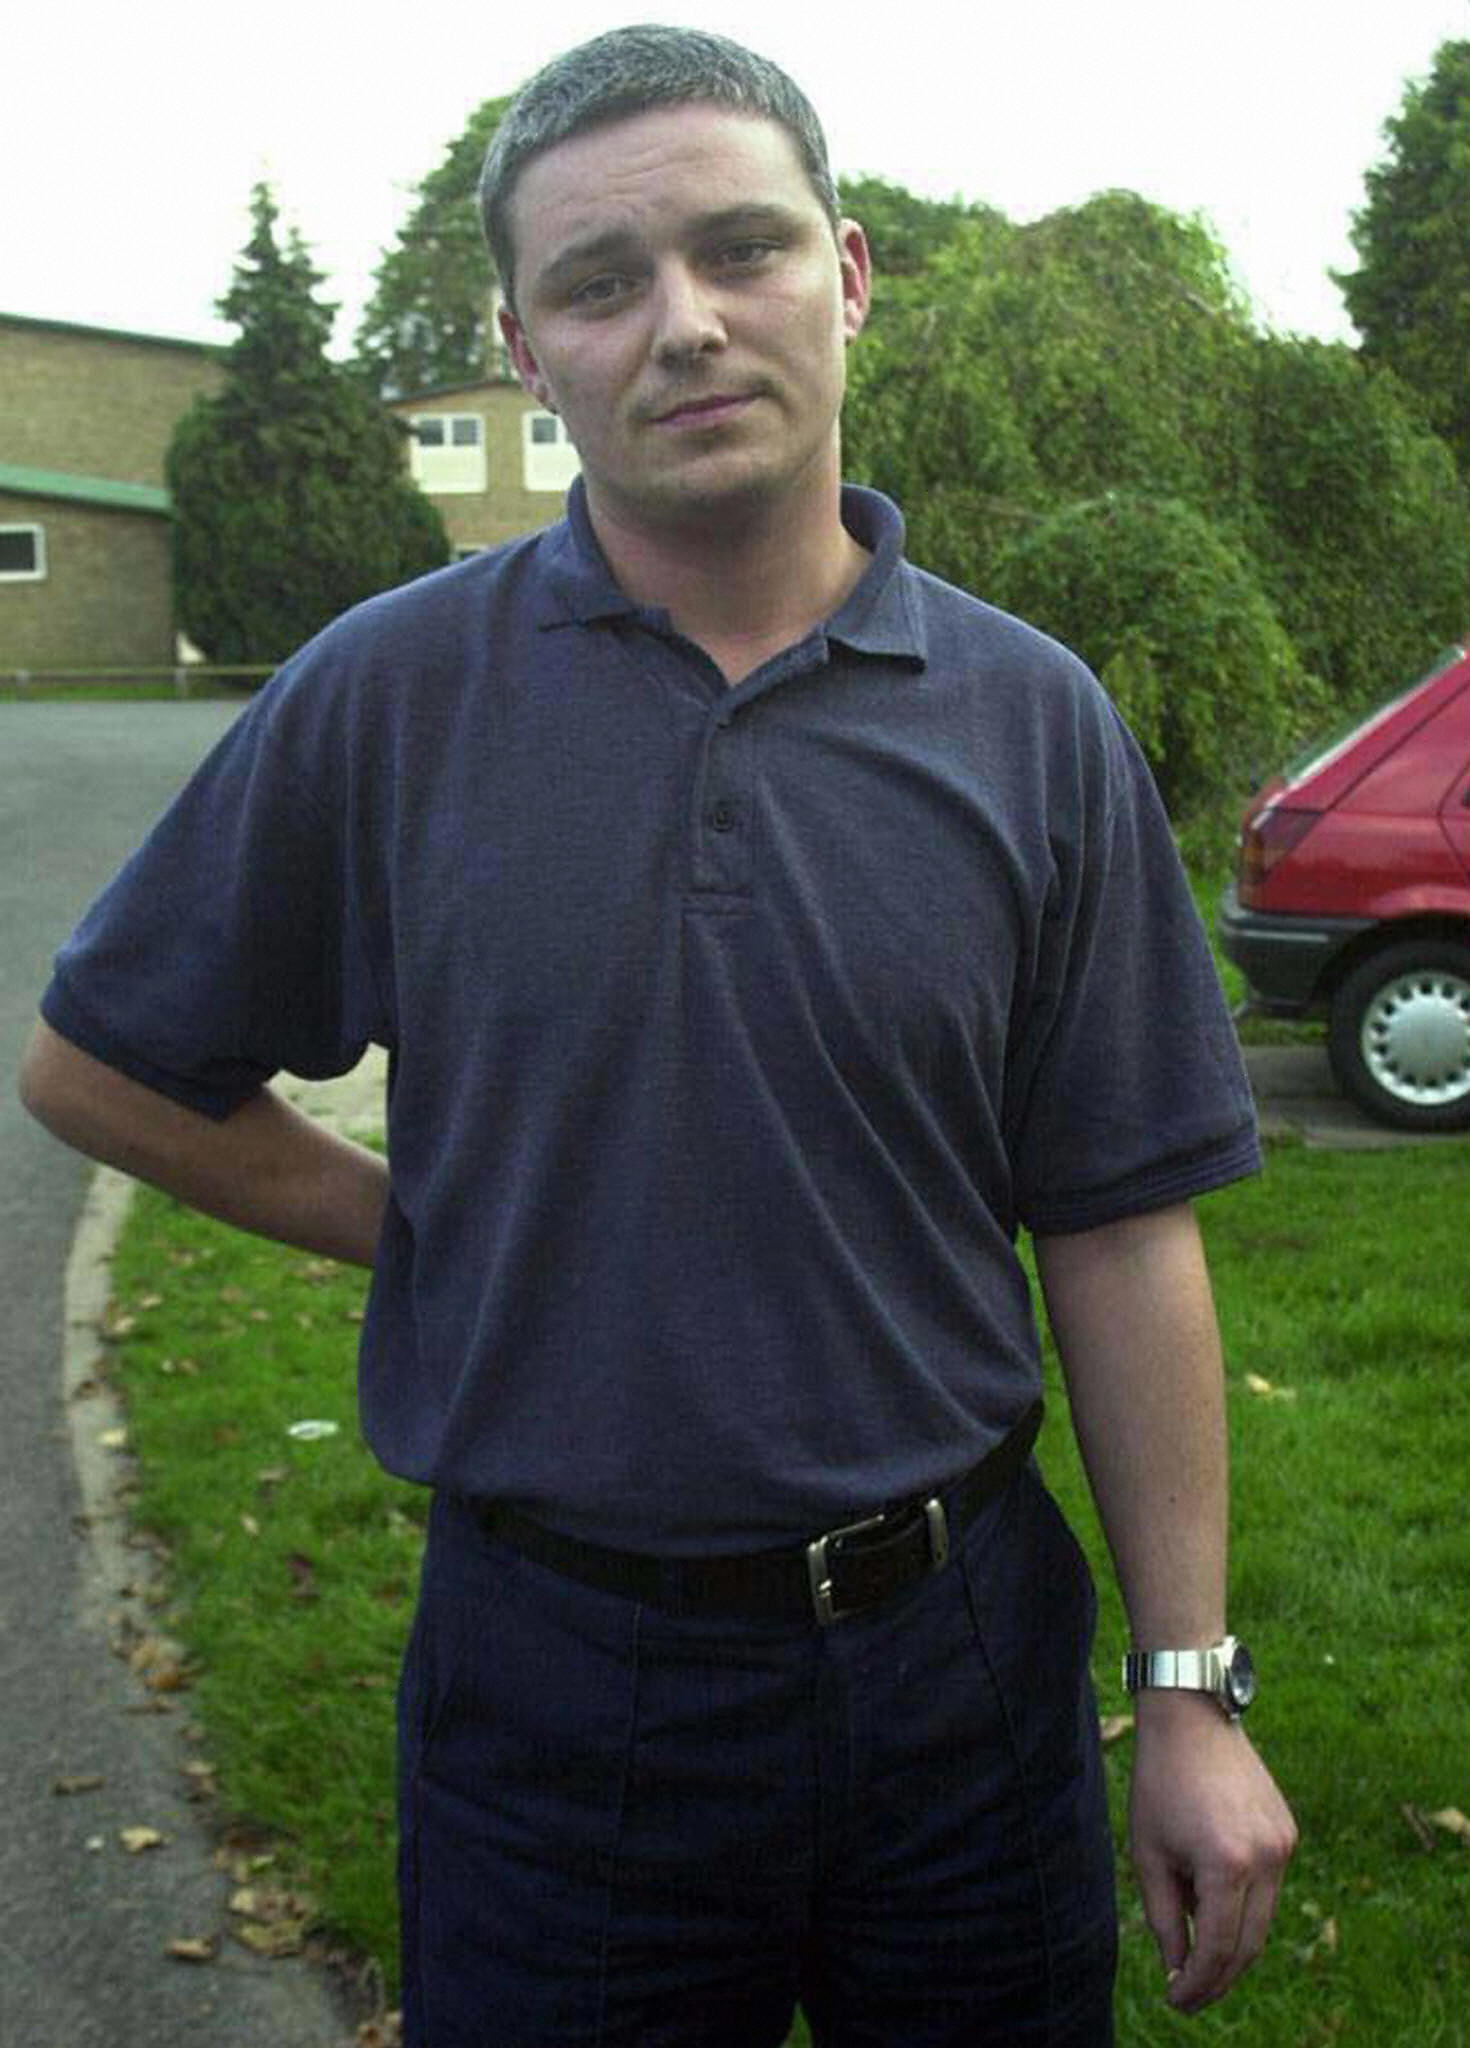 Caretaker Ian Huntley was jailed in 2013